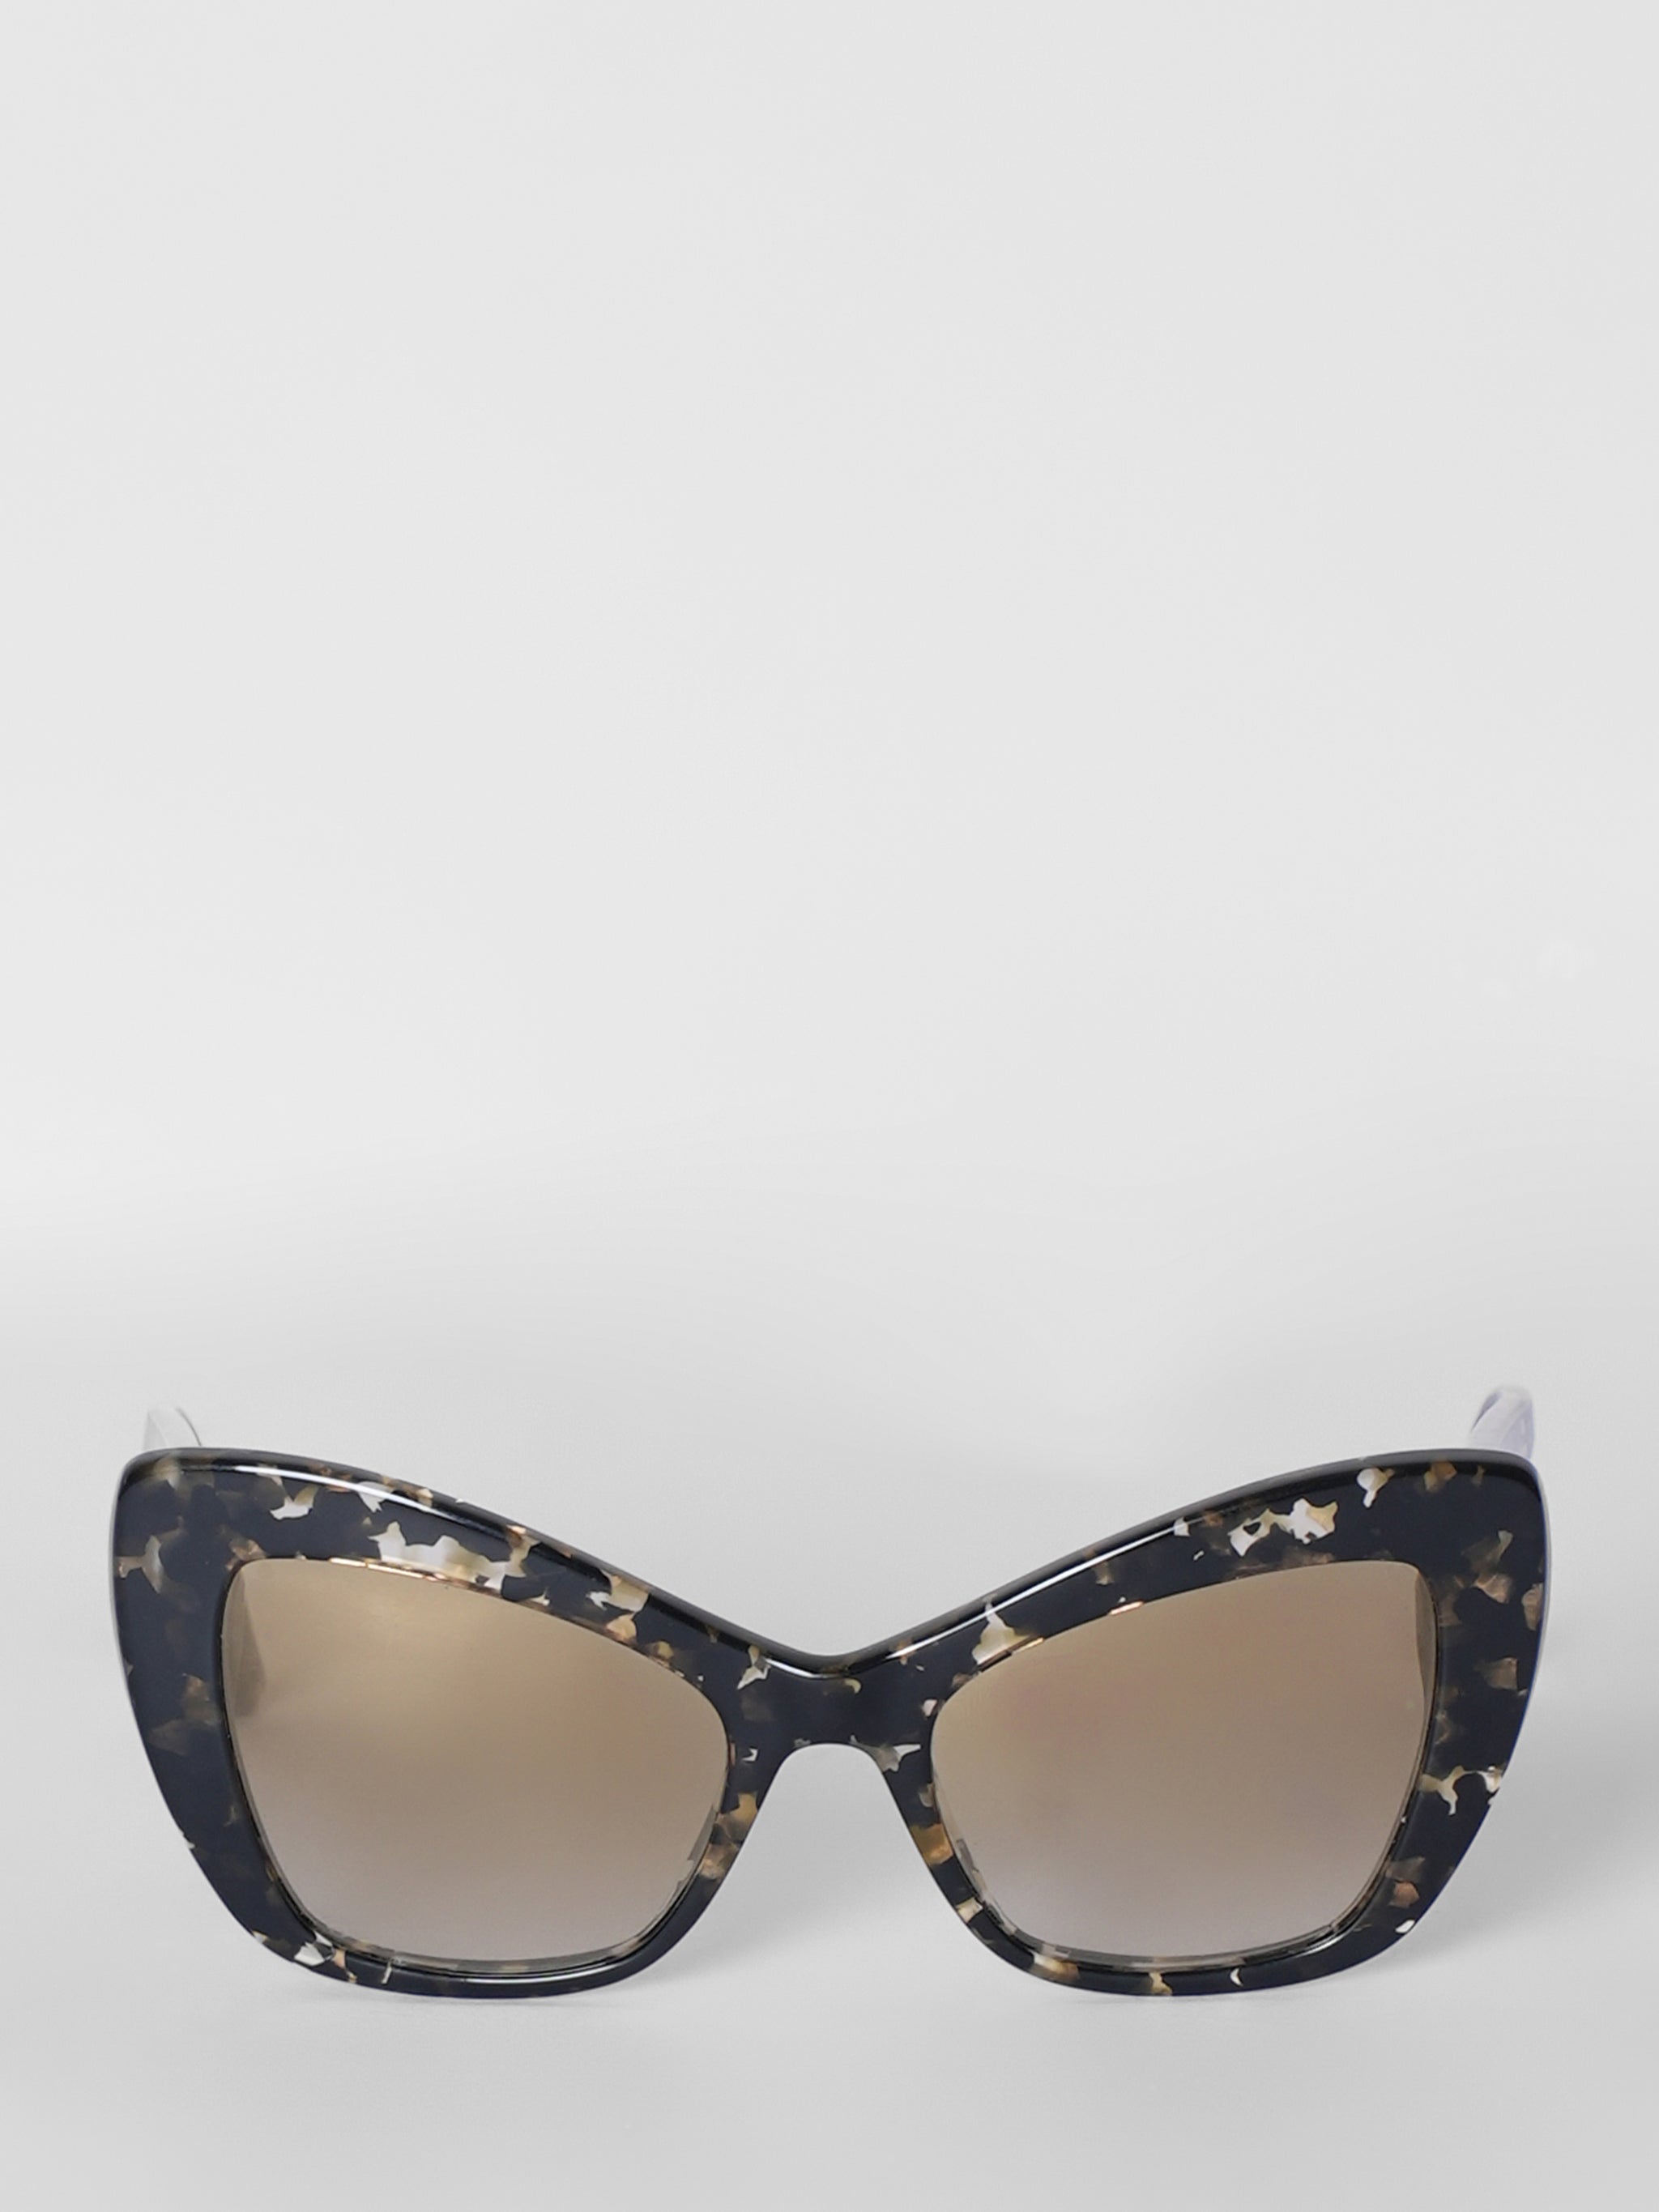 Dolce & Gabbana Marble Effect Cat's Eye Sunglasses